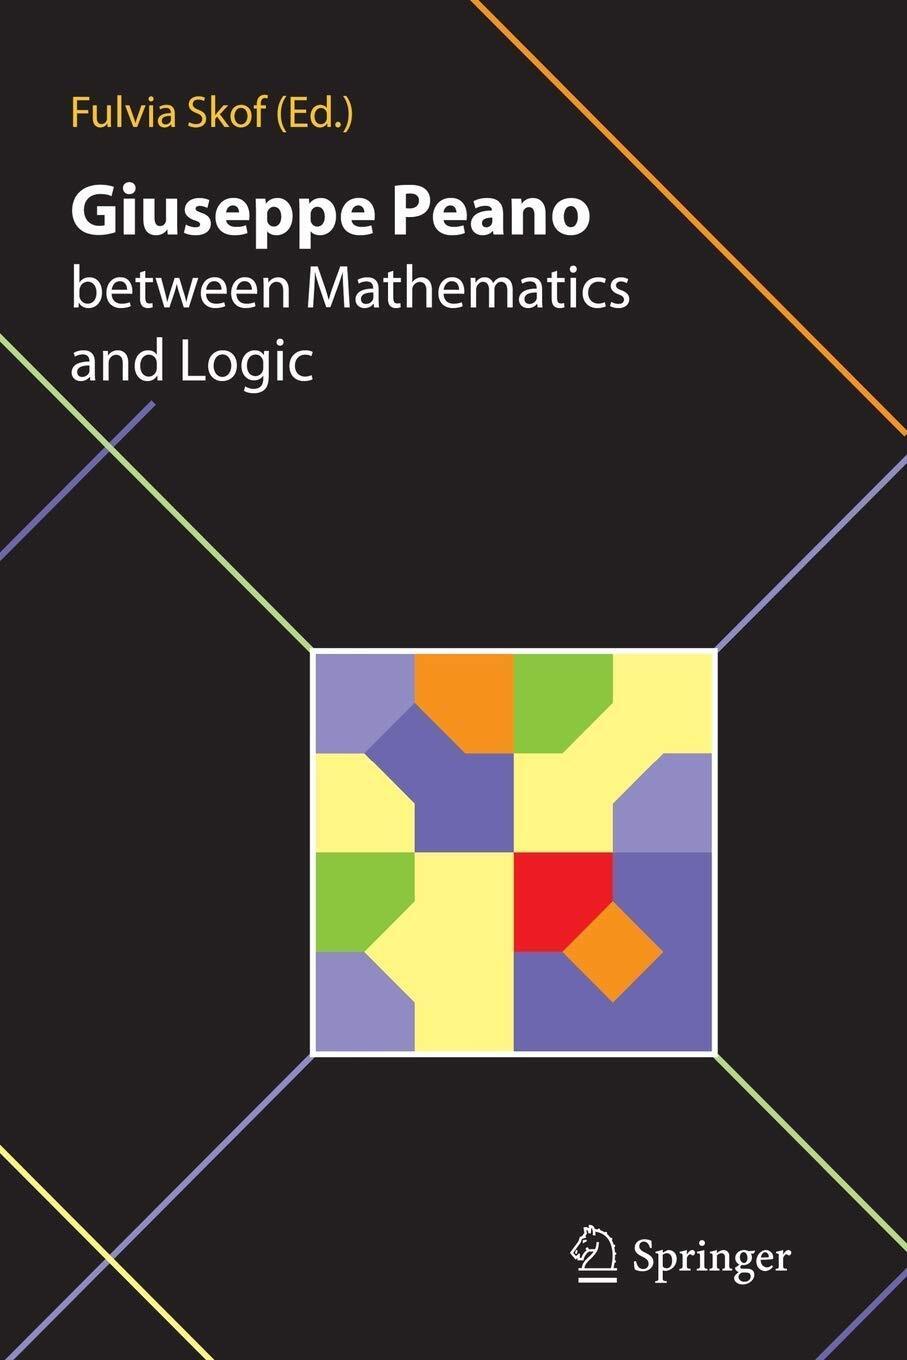 Giuseppe Peano between Mathematics and Logic - F. Skof - Springer, 2011 libro usato